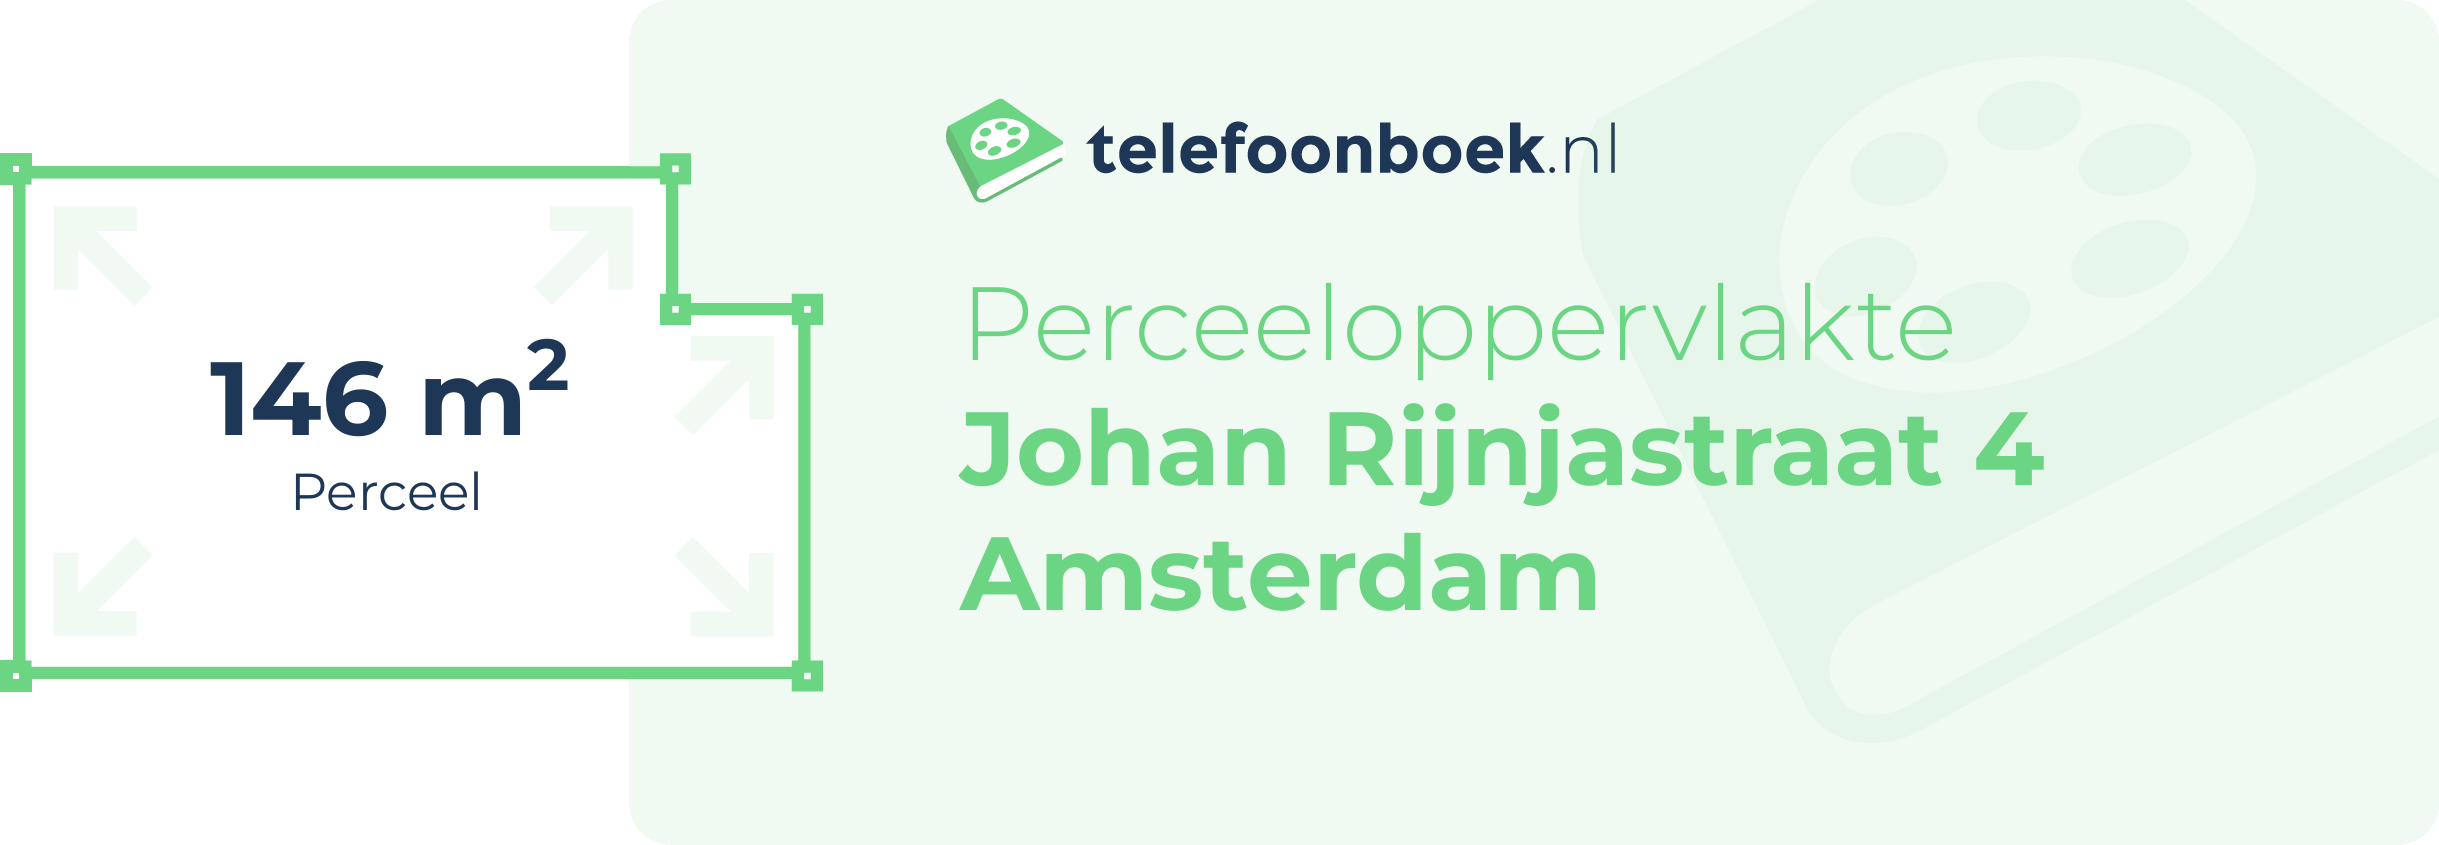 Perceeloppervlakte Johan Rijnjastraat 4 Amsterdam